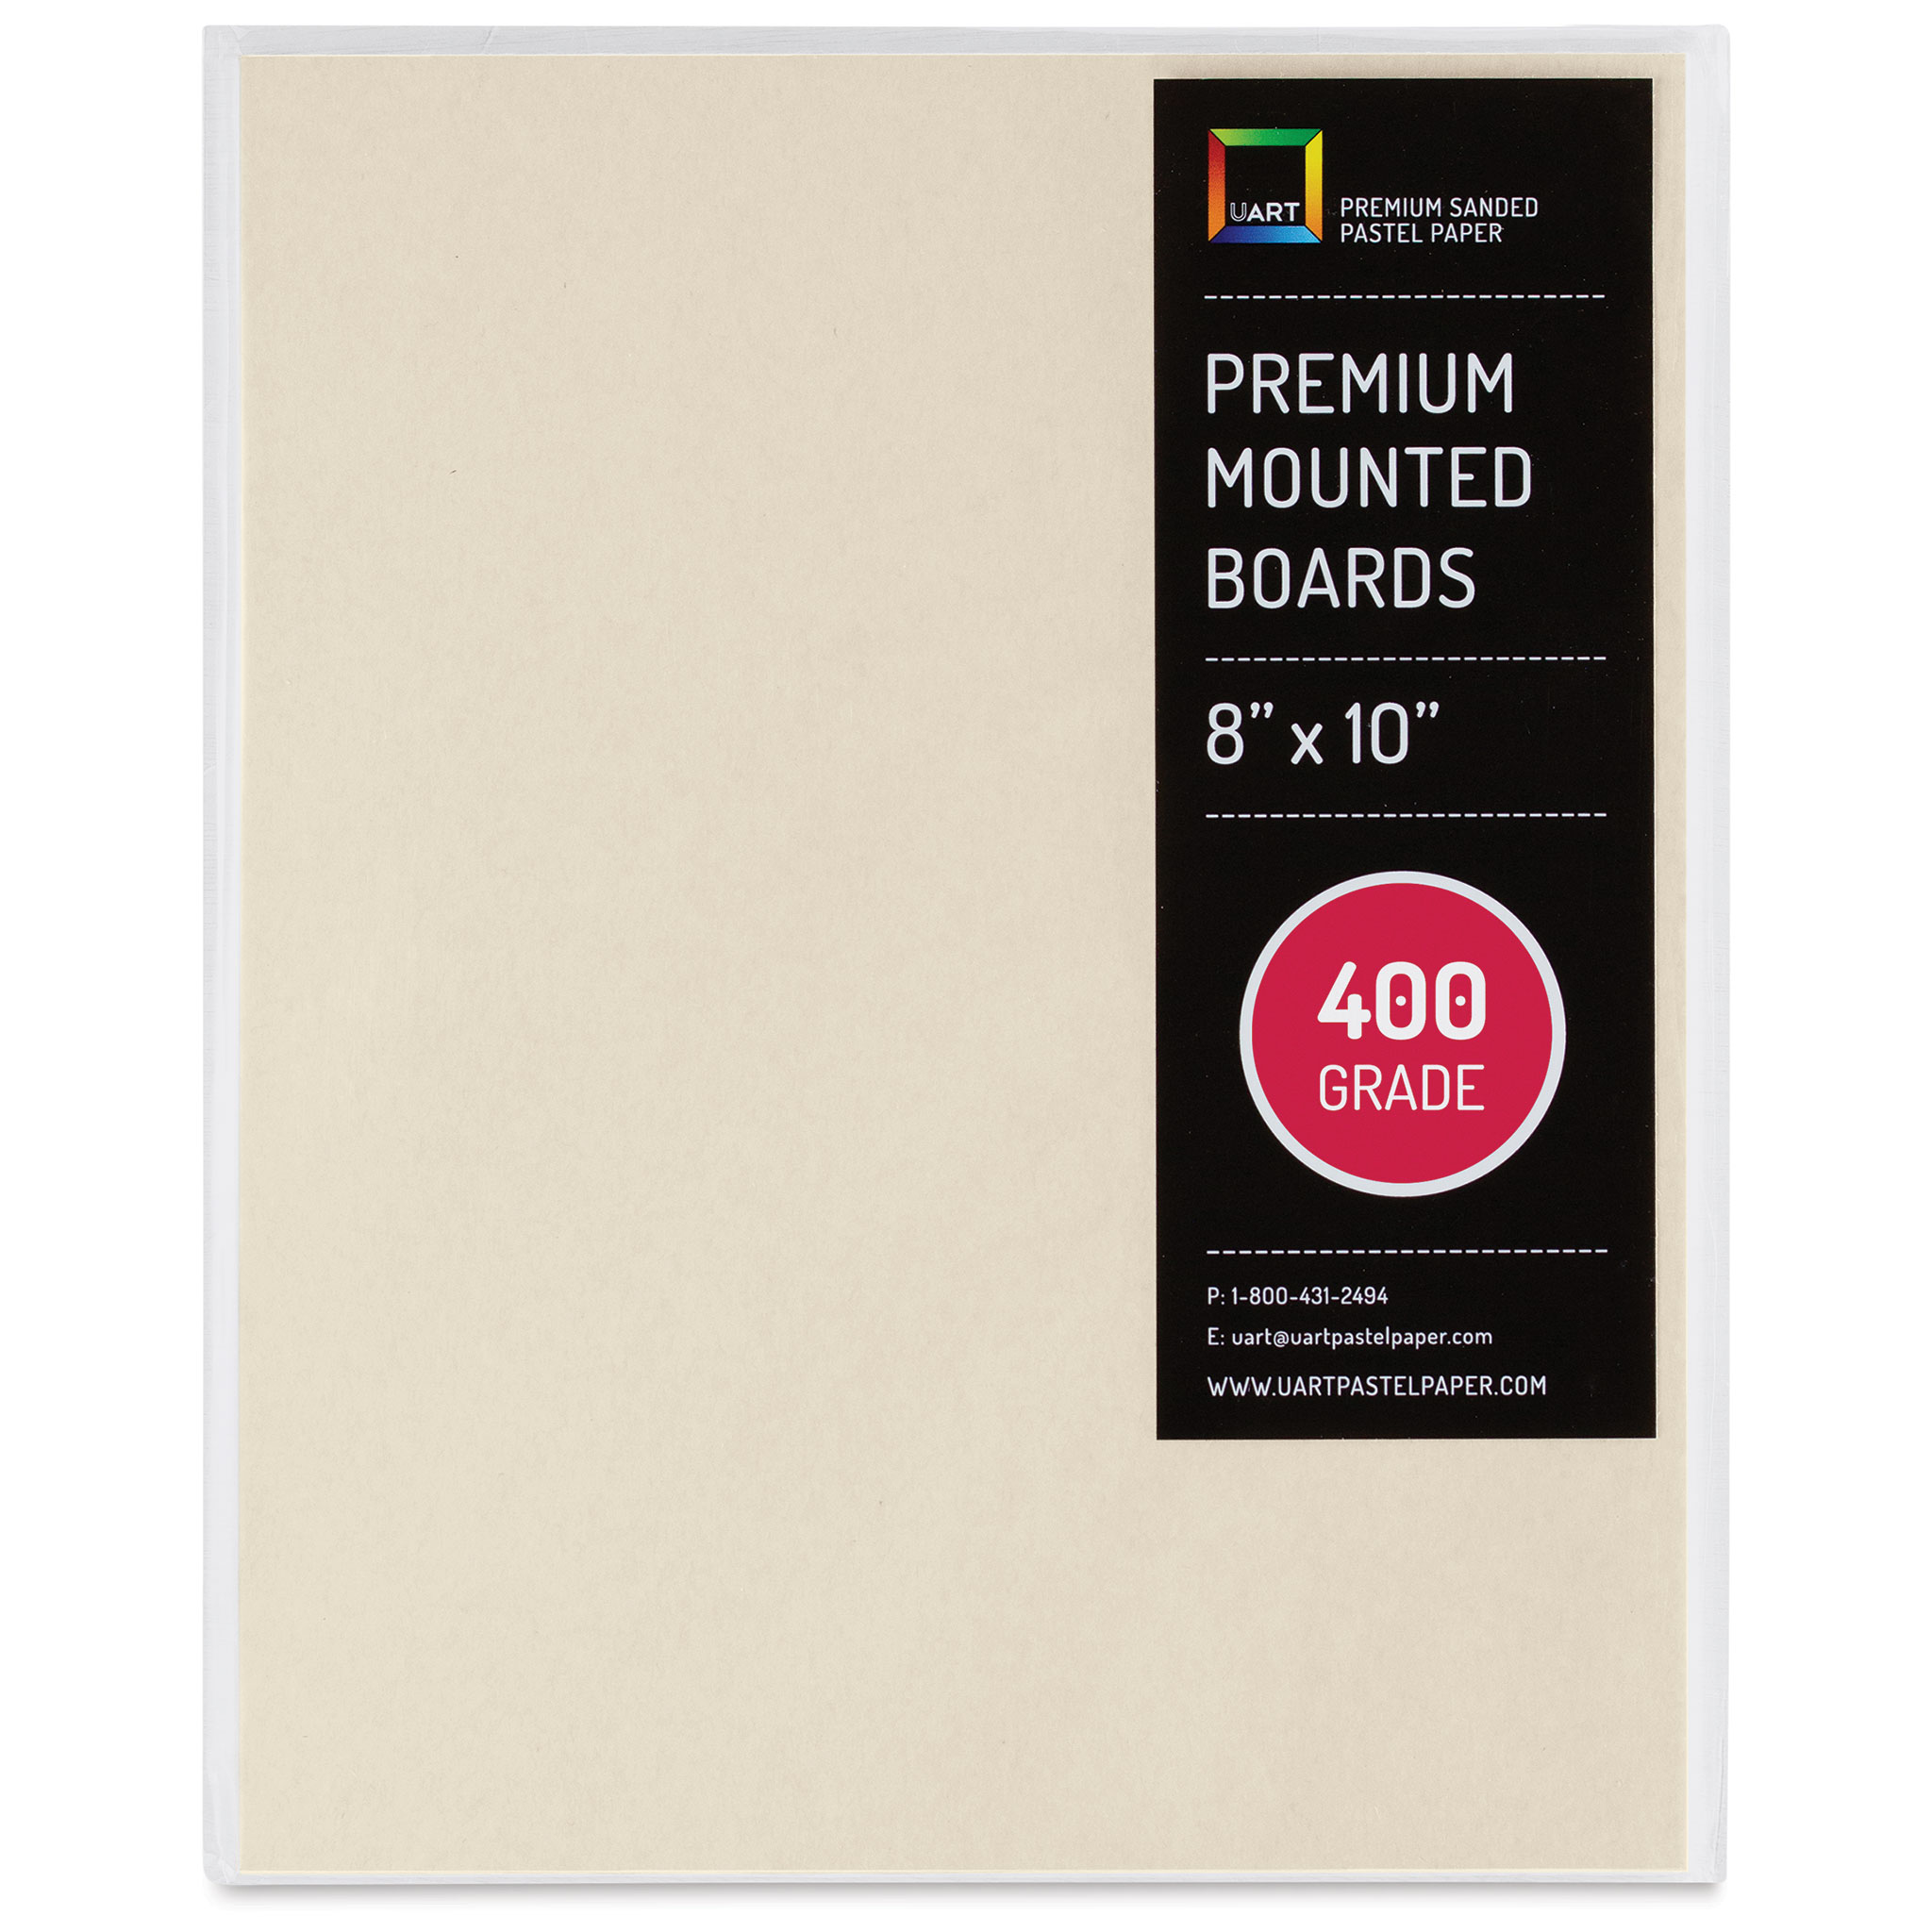  UART 400 Archival Sanded Pastel Paper- Ten 24x36 Inch